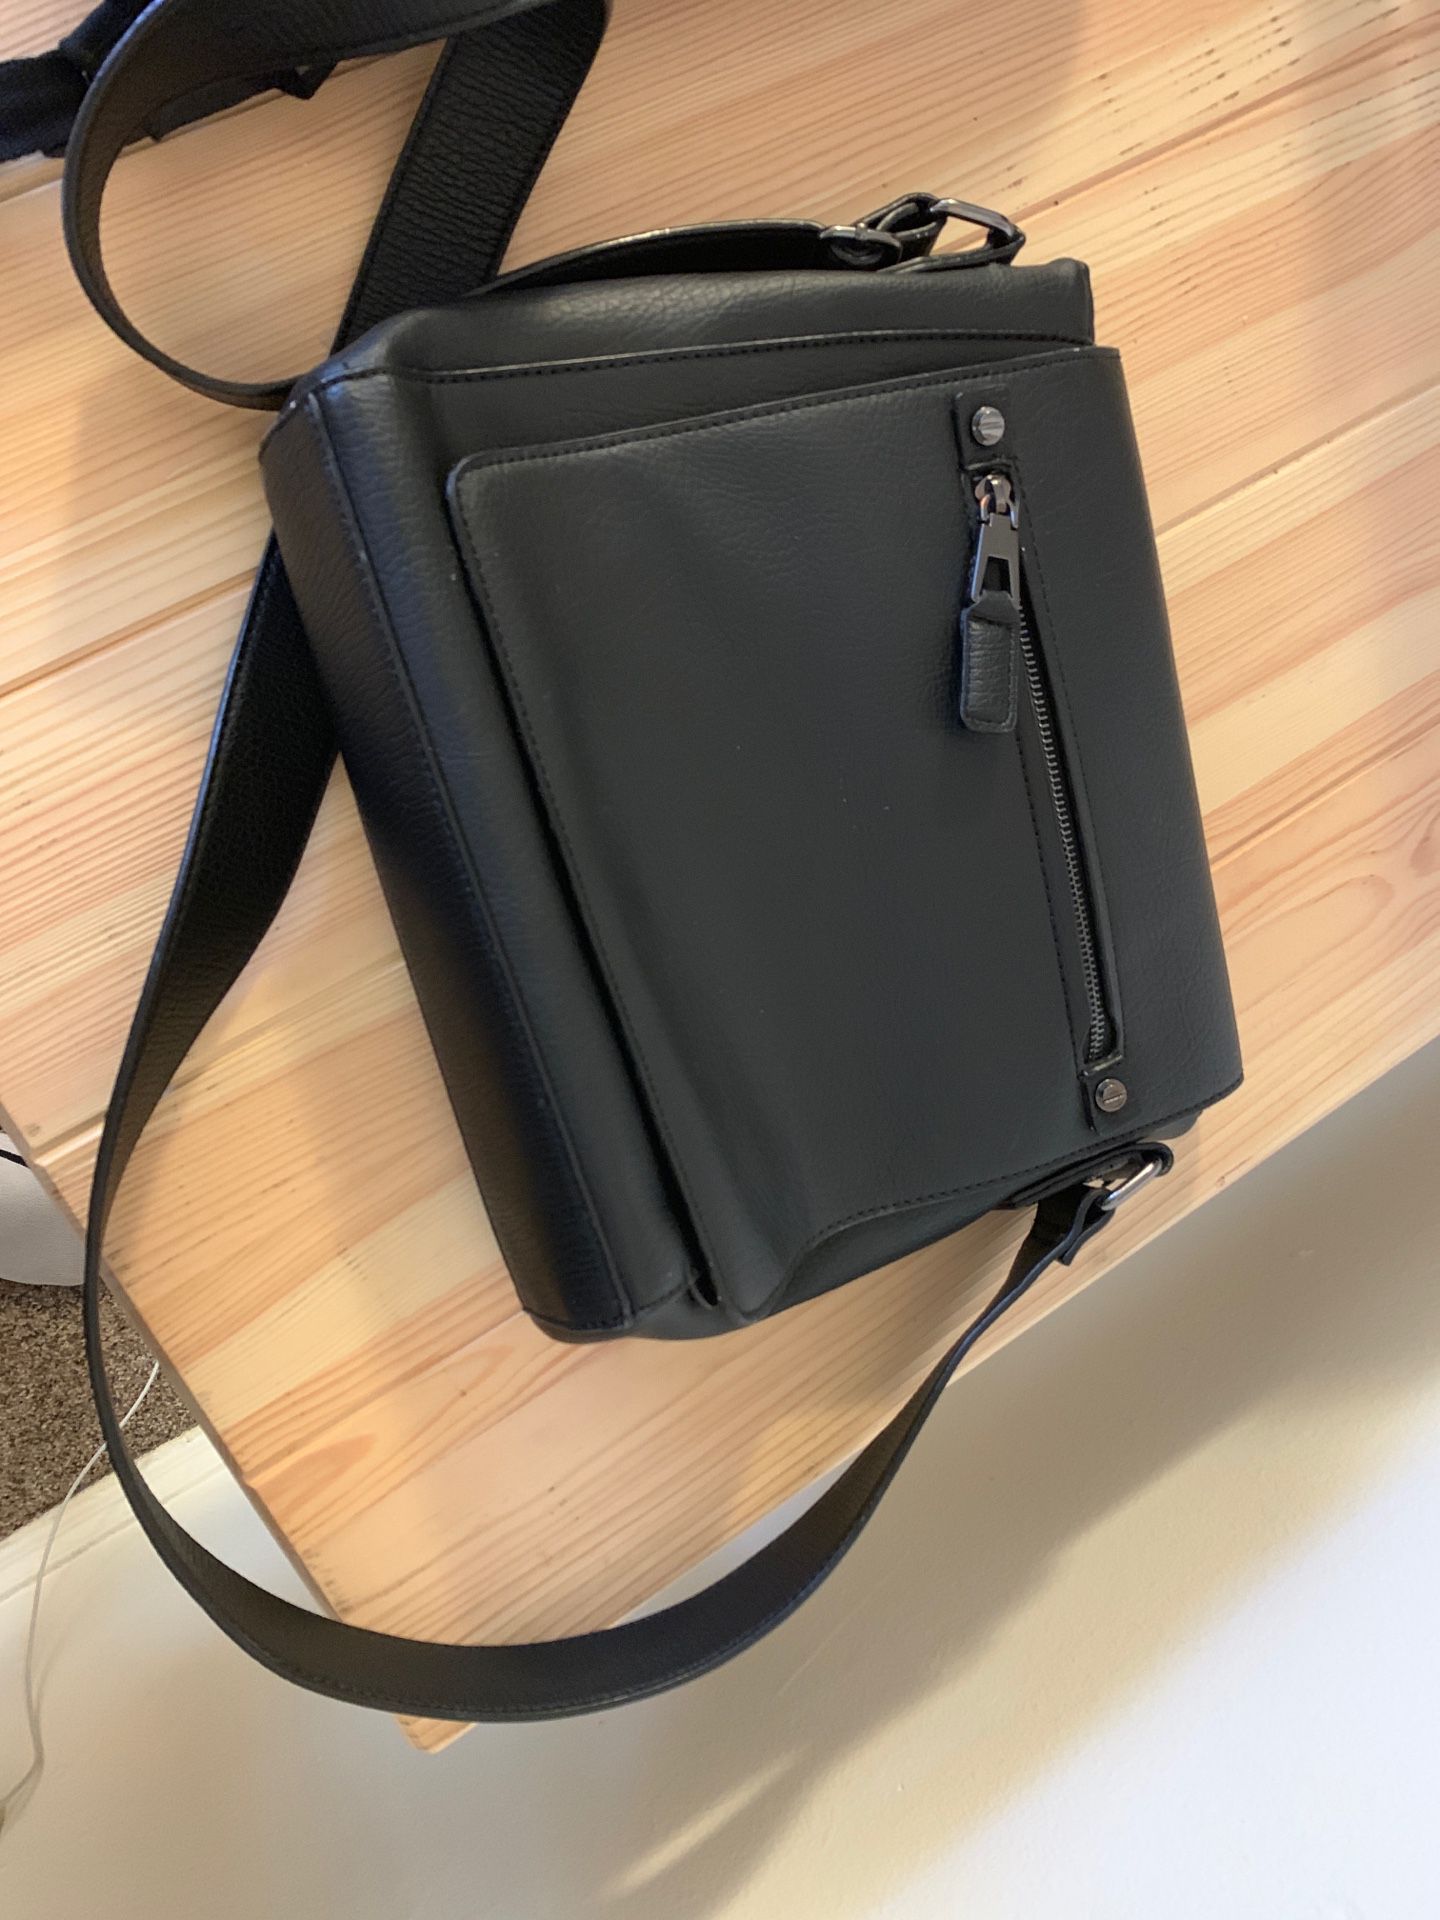 Leather Messenger bag from Aldo’s